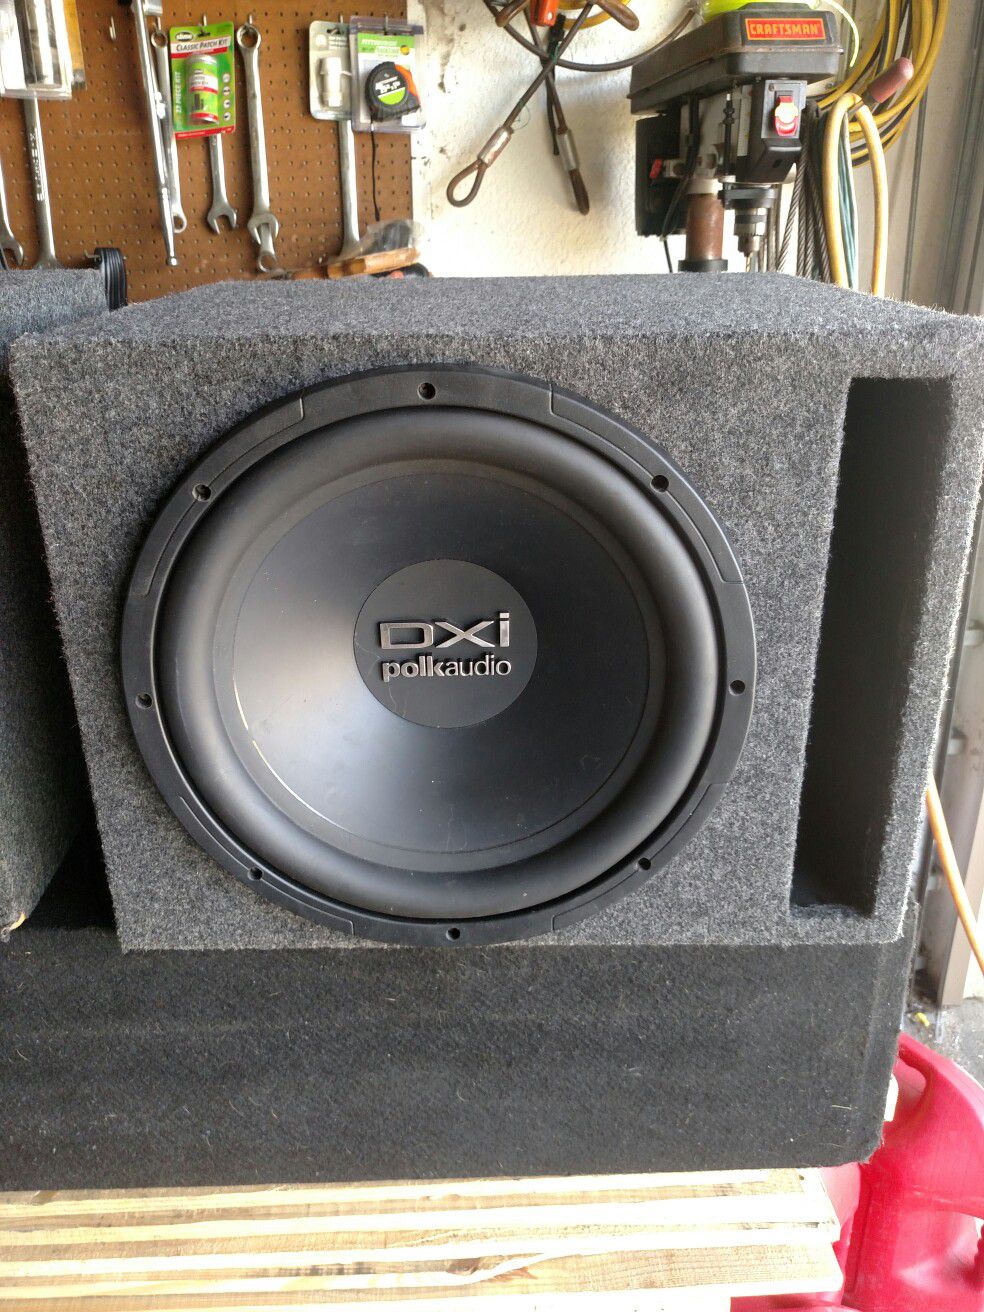 Polk audio DXI 12 sub in vented box